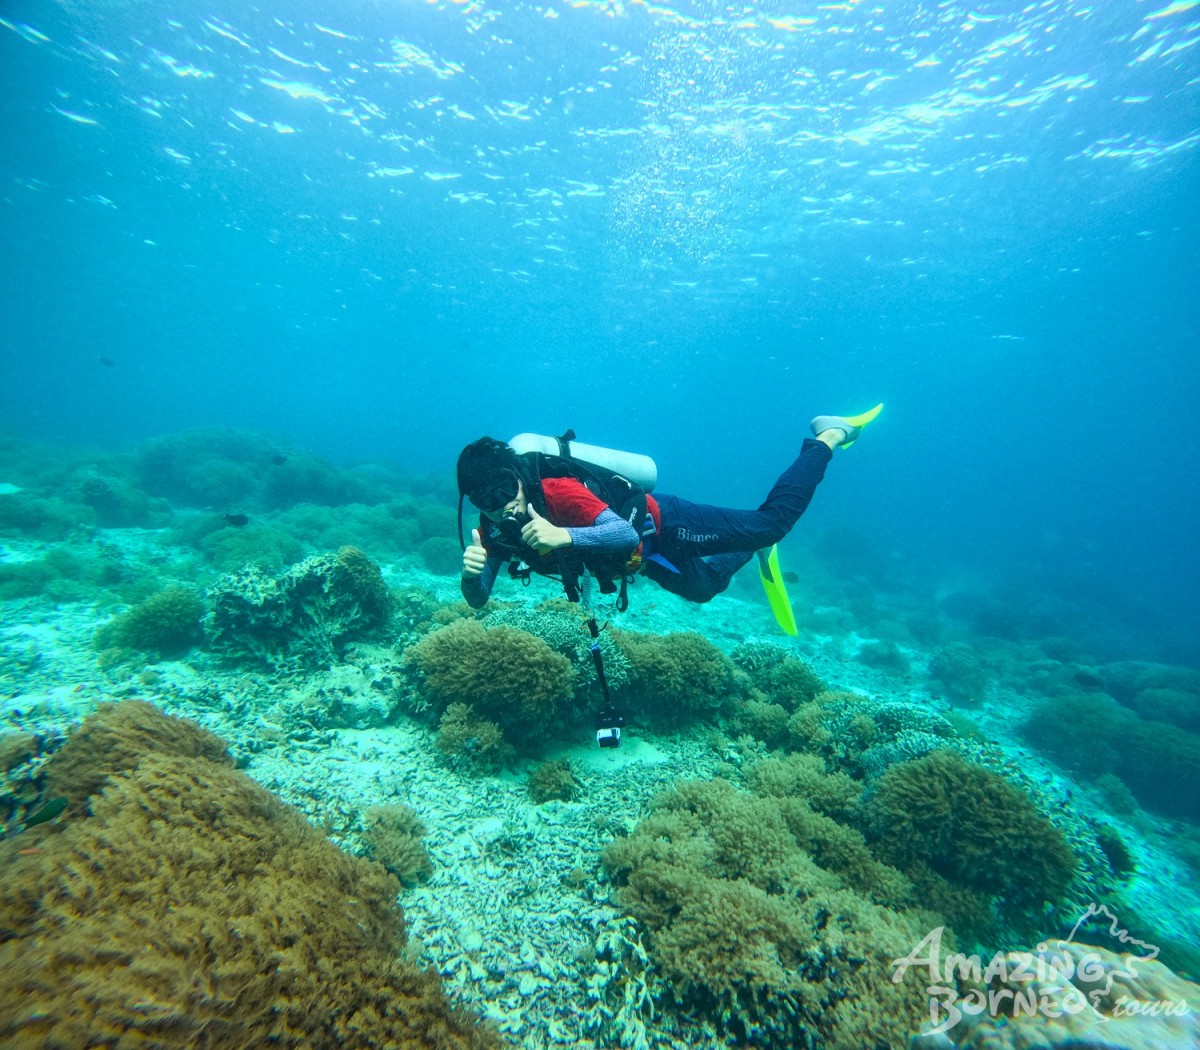 Celebes Explorer 9 - Liveaboard & Dive In Sipadan - Amazing Borneo Tours